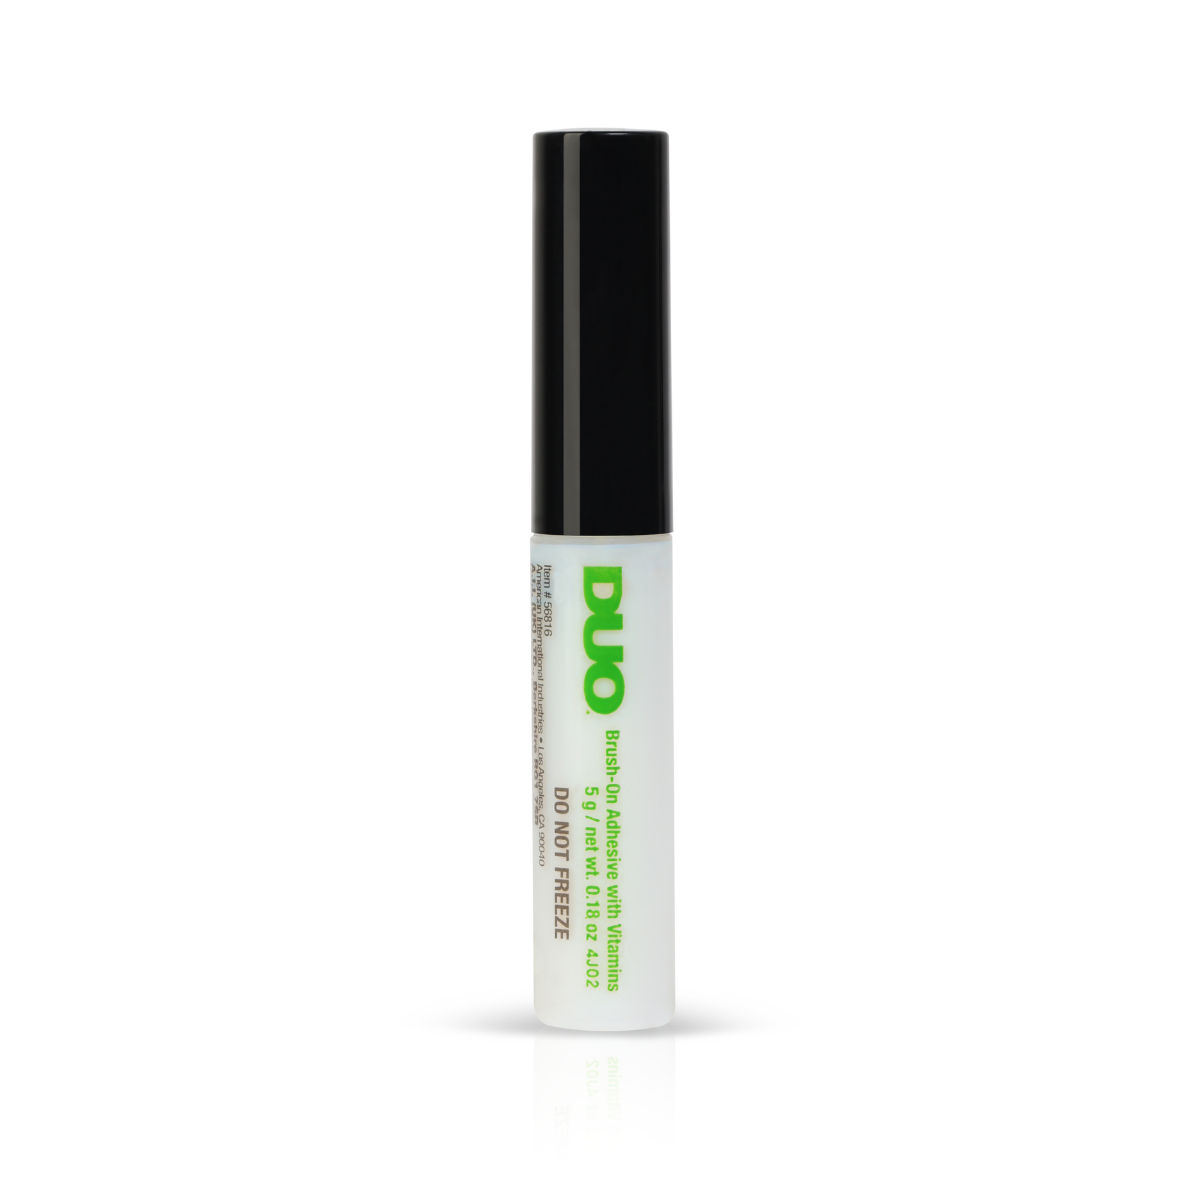 DUO Adhesive Clear Brush (5g)